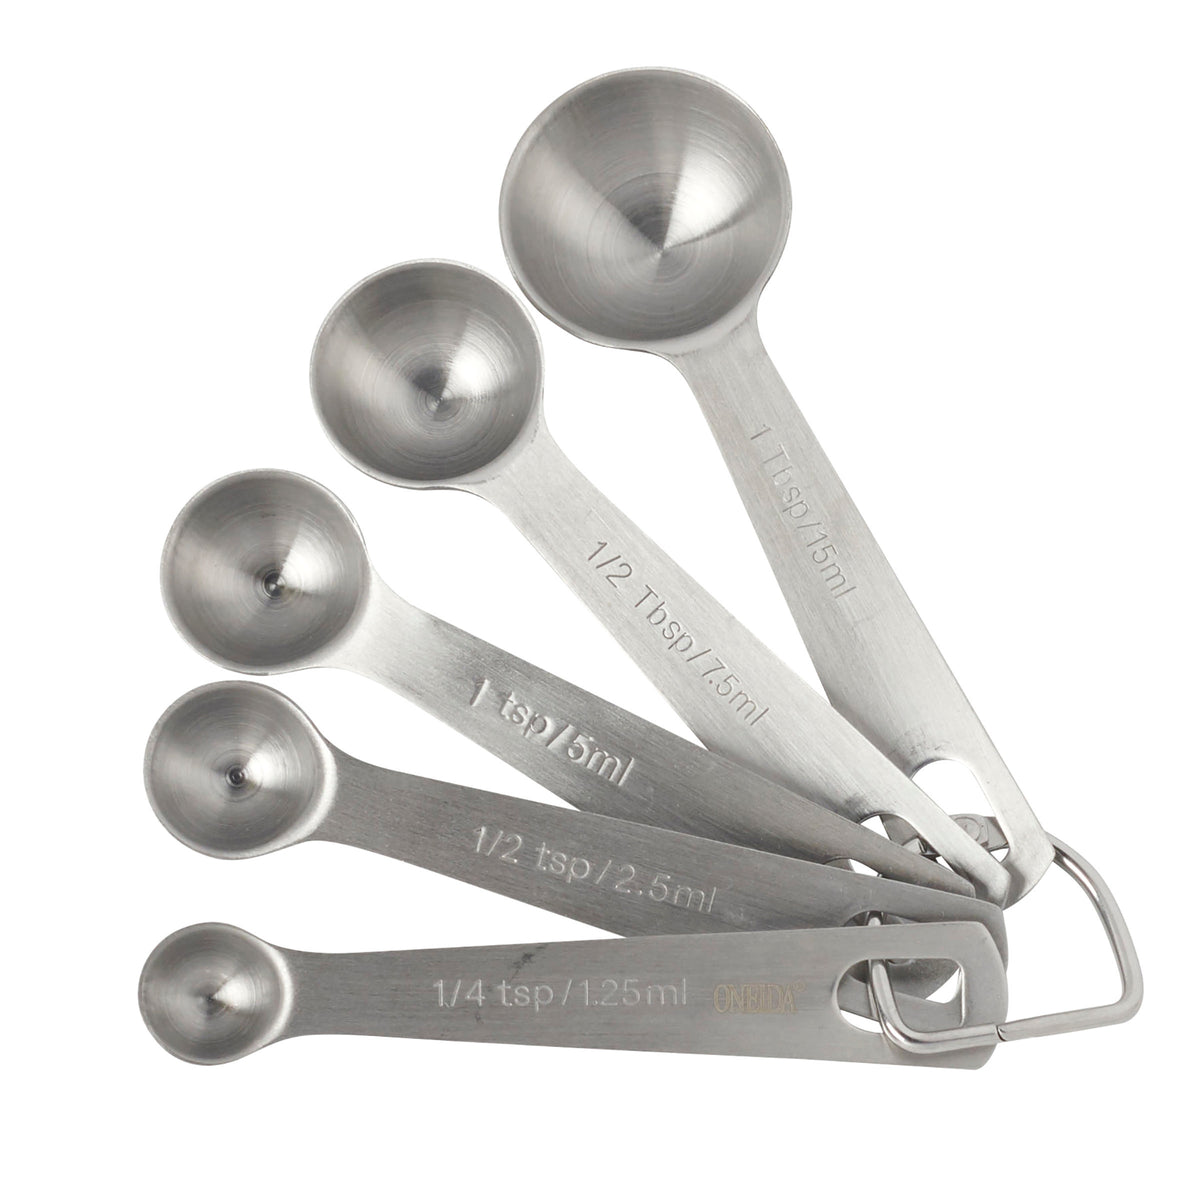 Stainless Steel Measuring Spoons Tablespoon Measuring Spoon Set